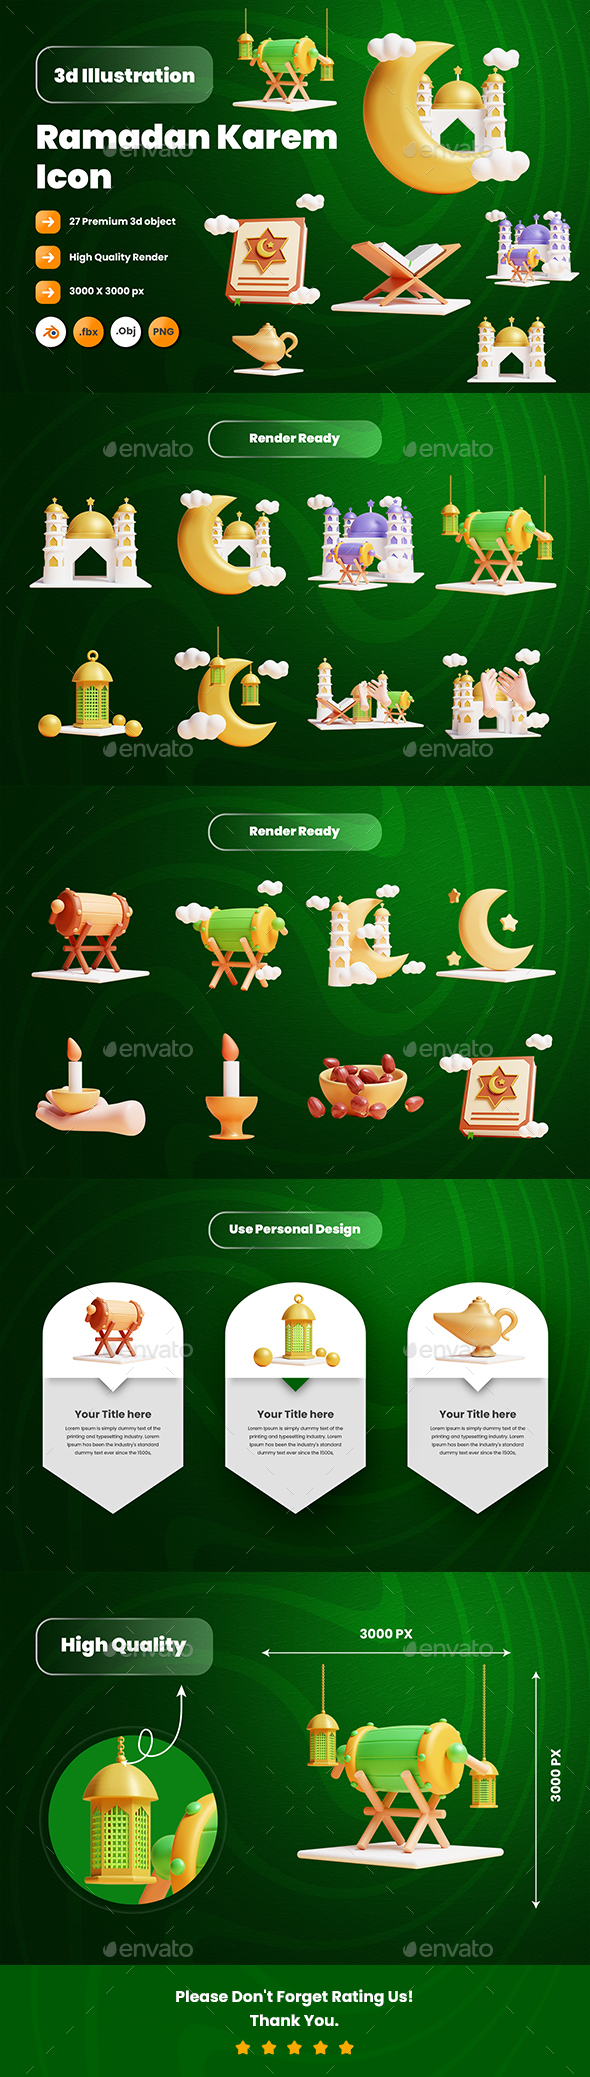 [DOWNLOAD]Ramadan 3d Illustration Icon Pack-2